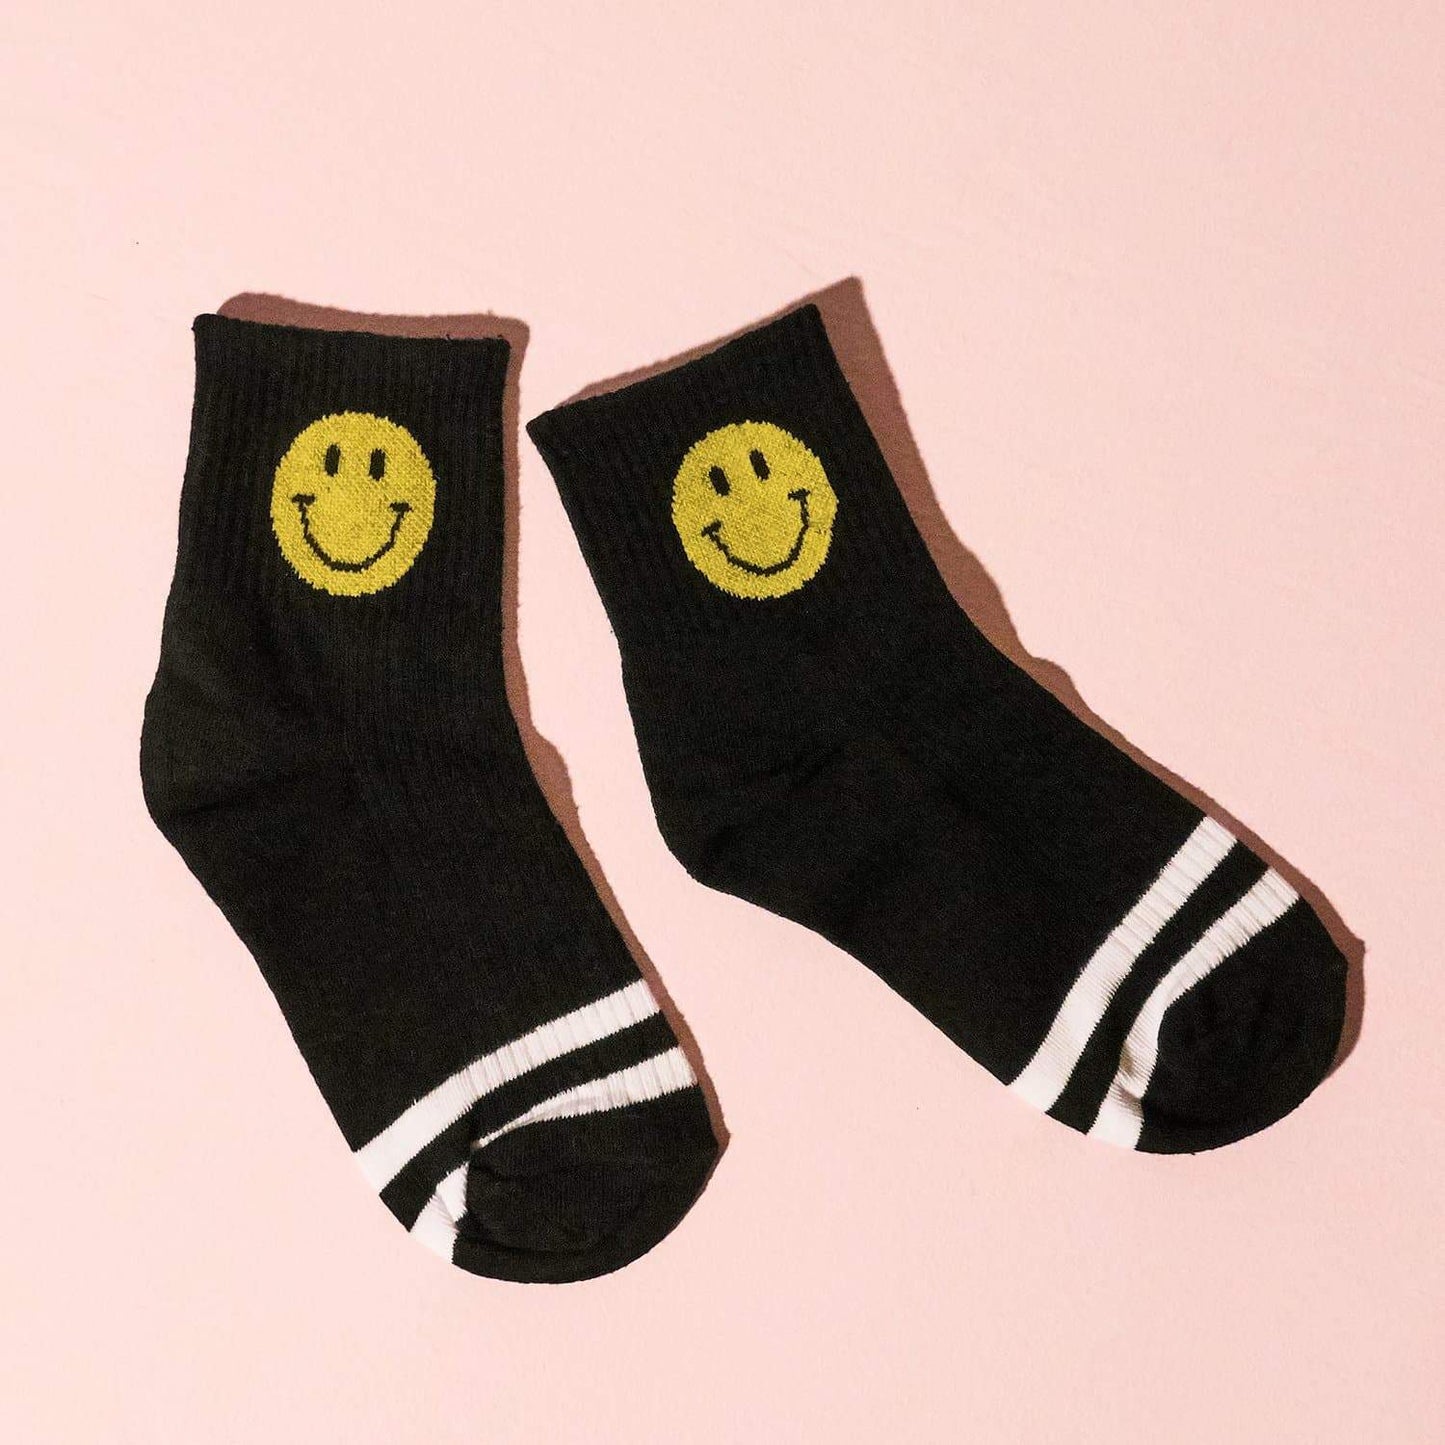 Smiley Sweat Socks - Black